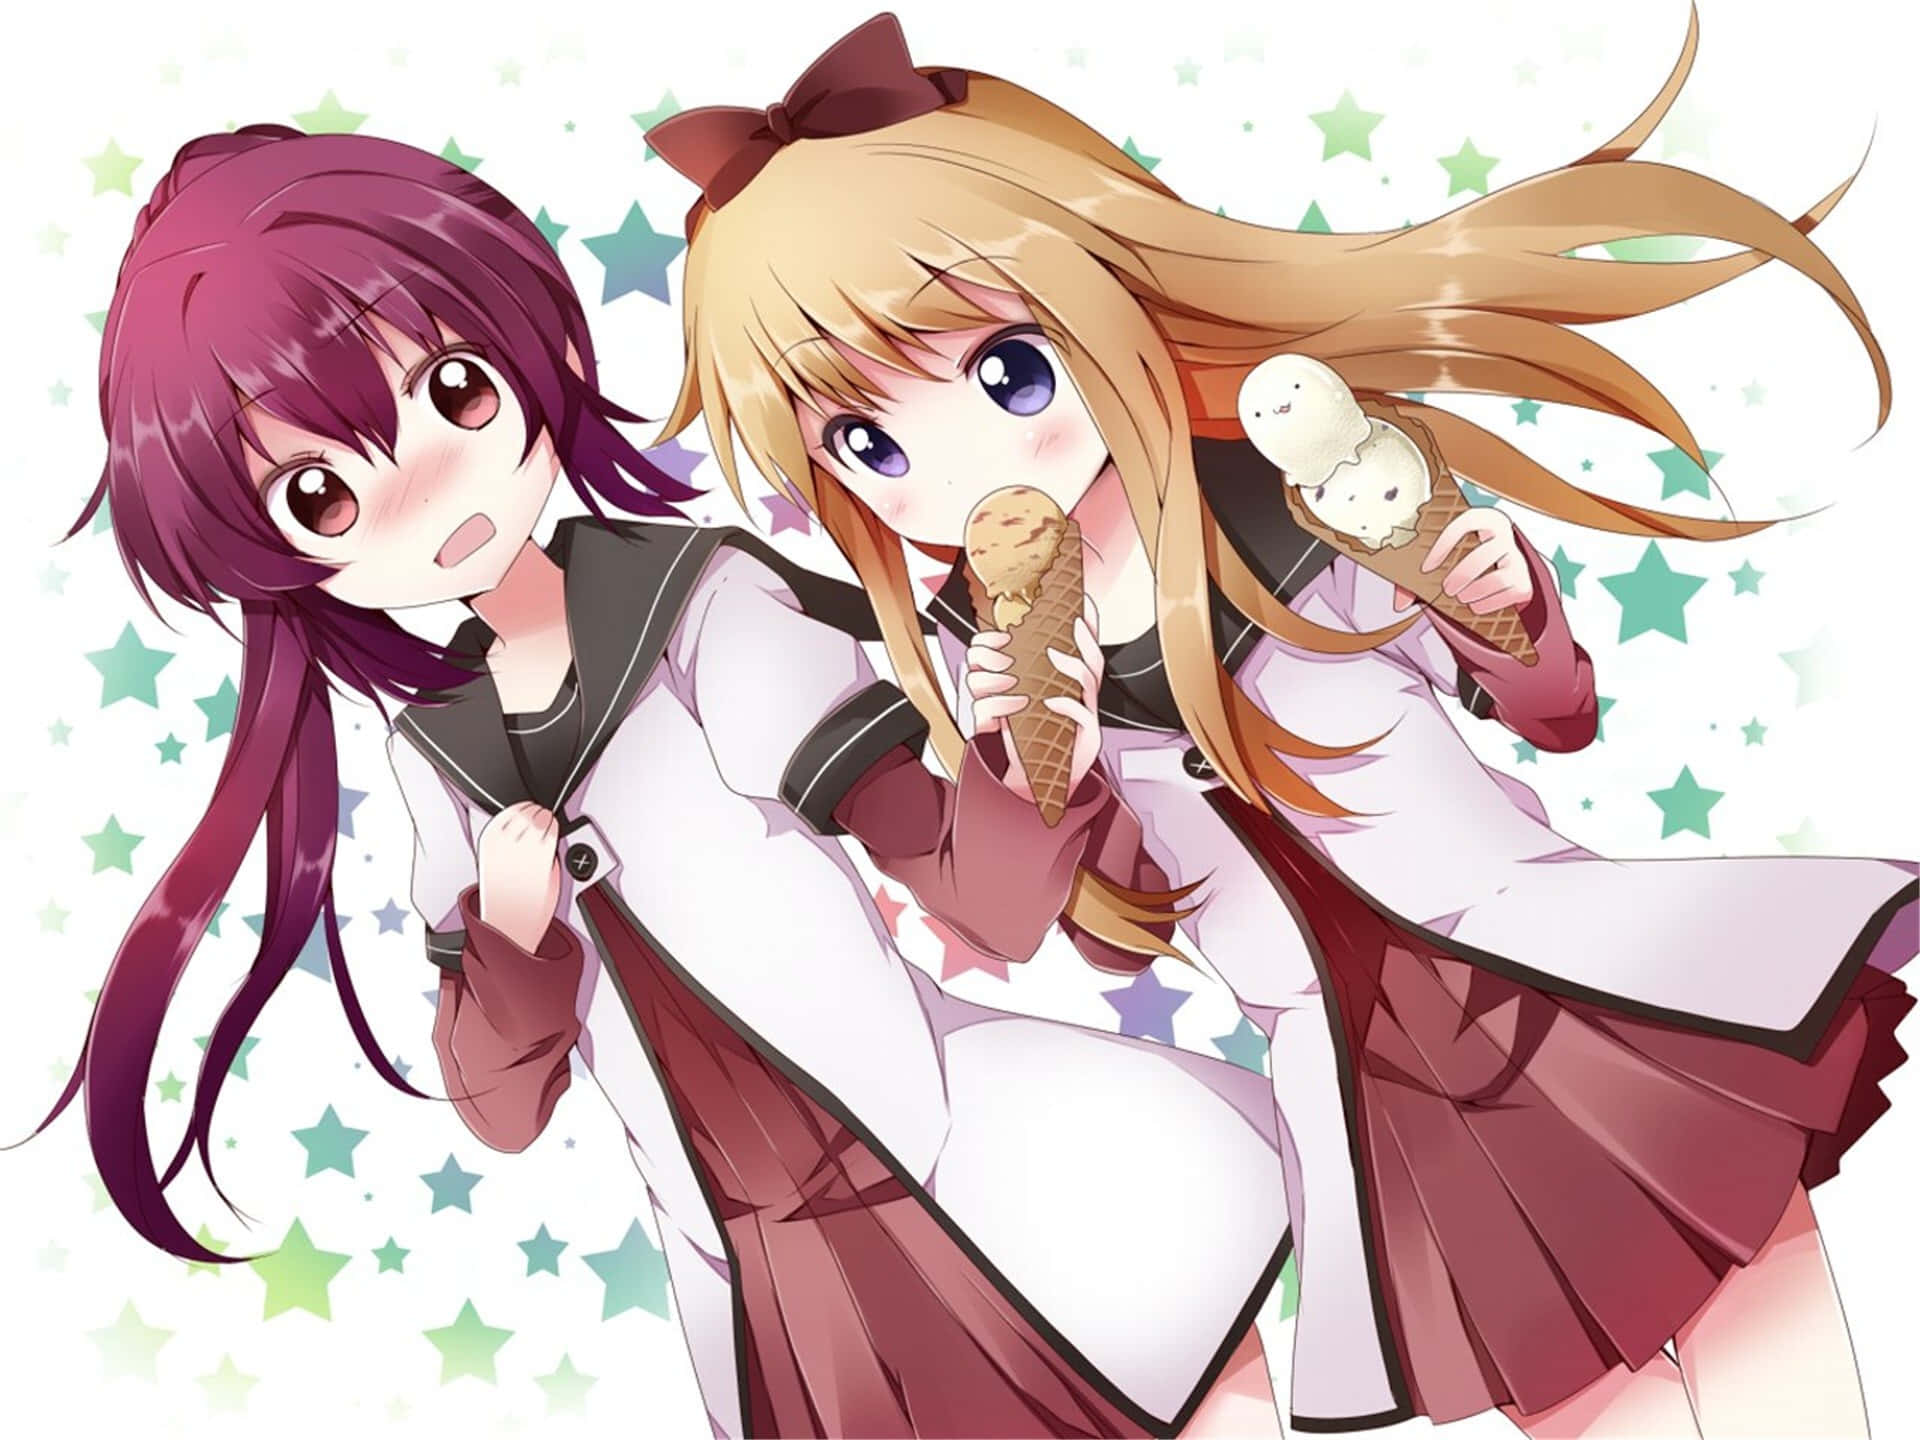 Two Anime Girls Holding Ice Cream Cones Wallpaper